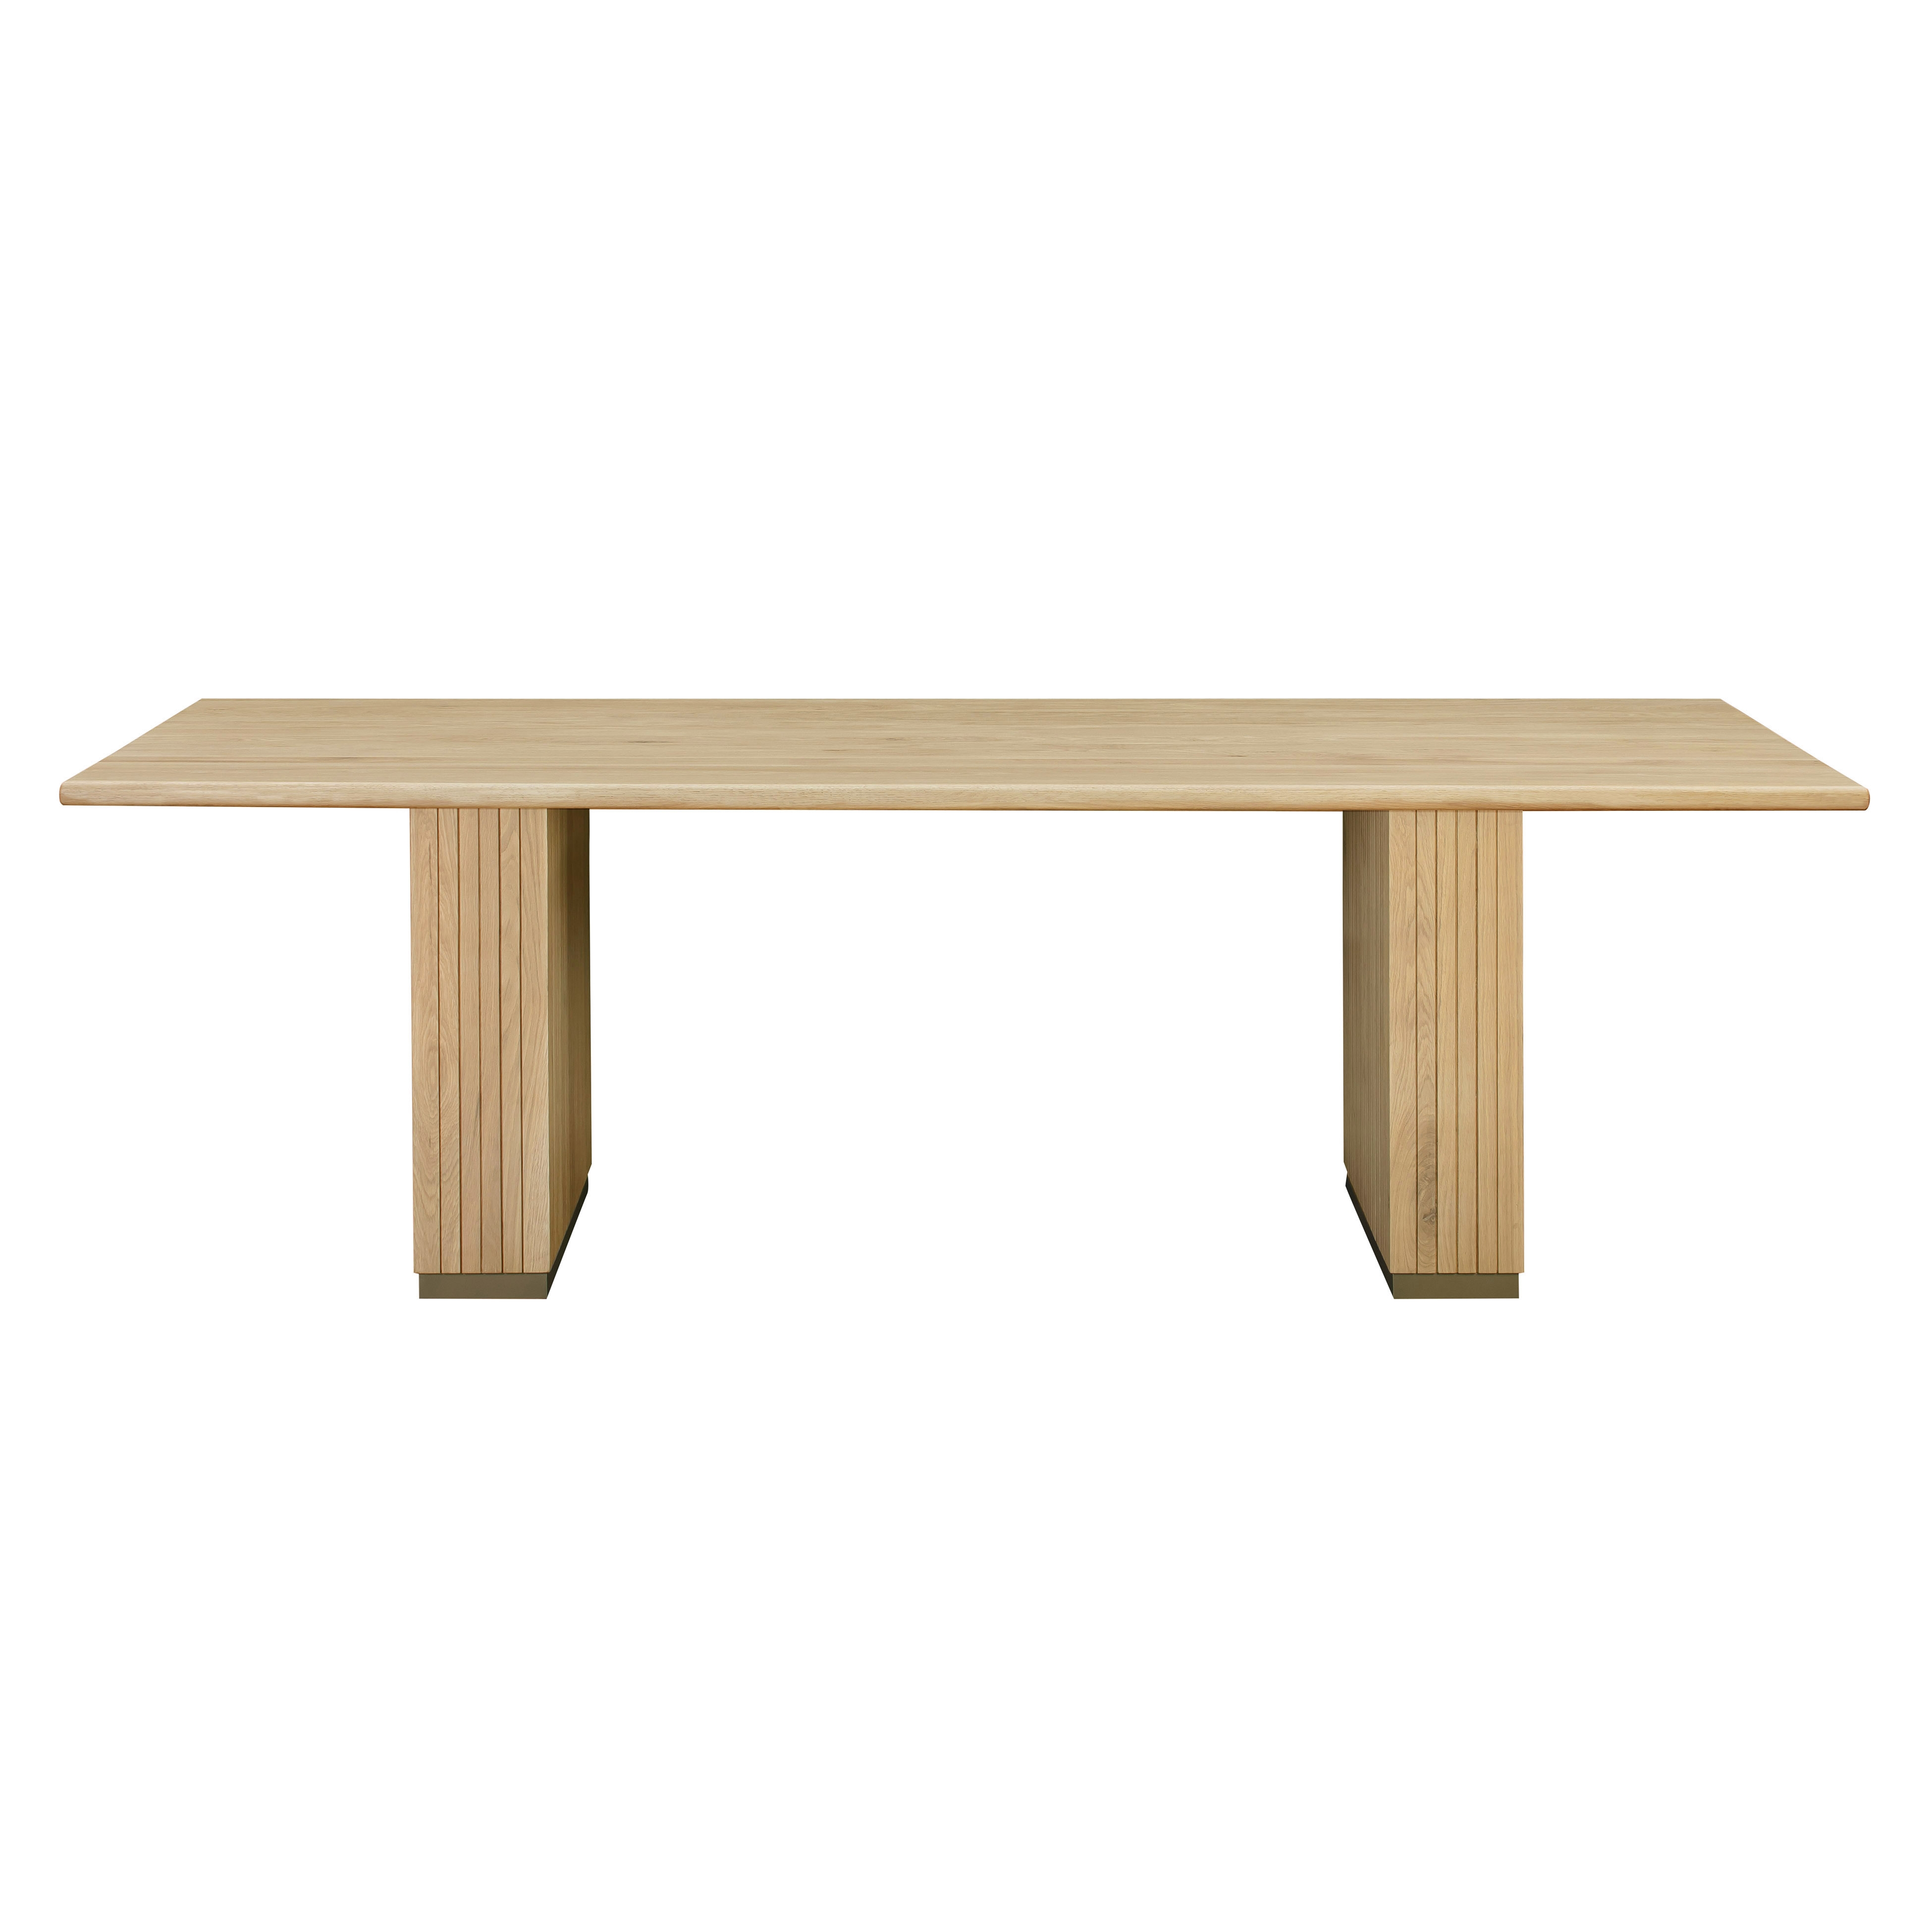 Chelsea Natural Oak Wood Rectangular Dining Table - Image 1